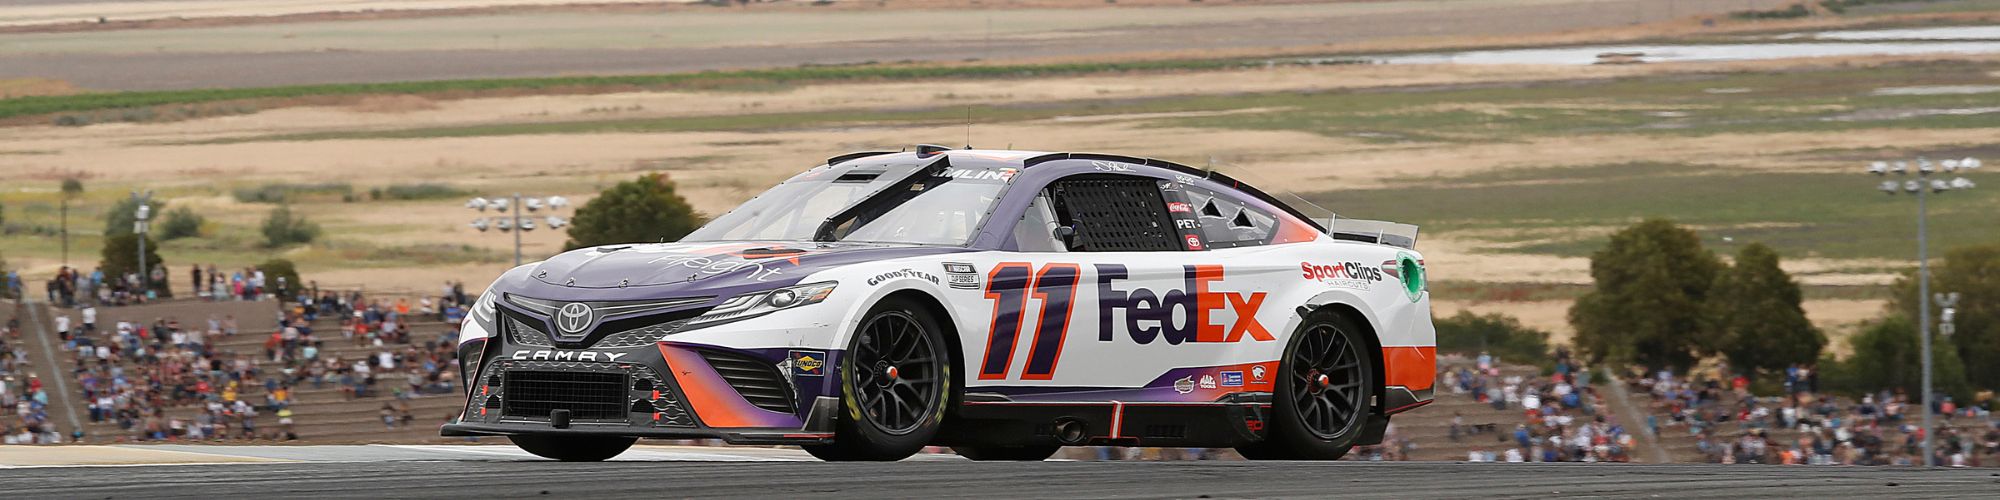 FedEx Racing